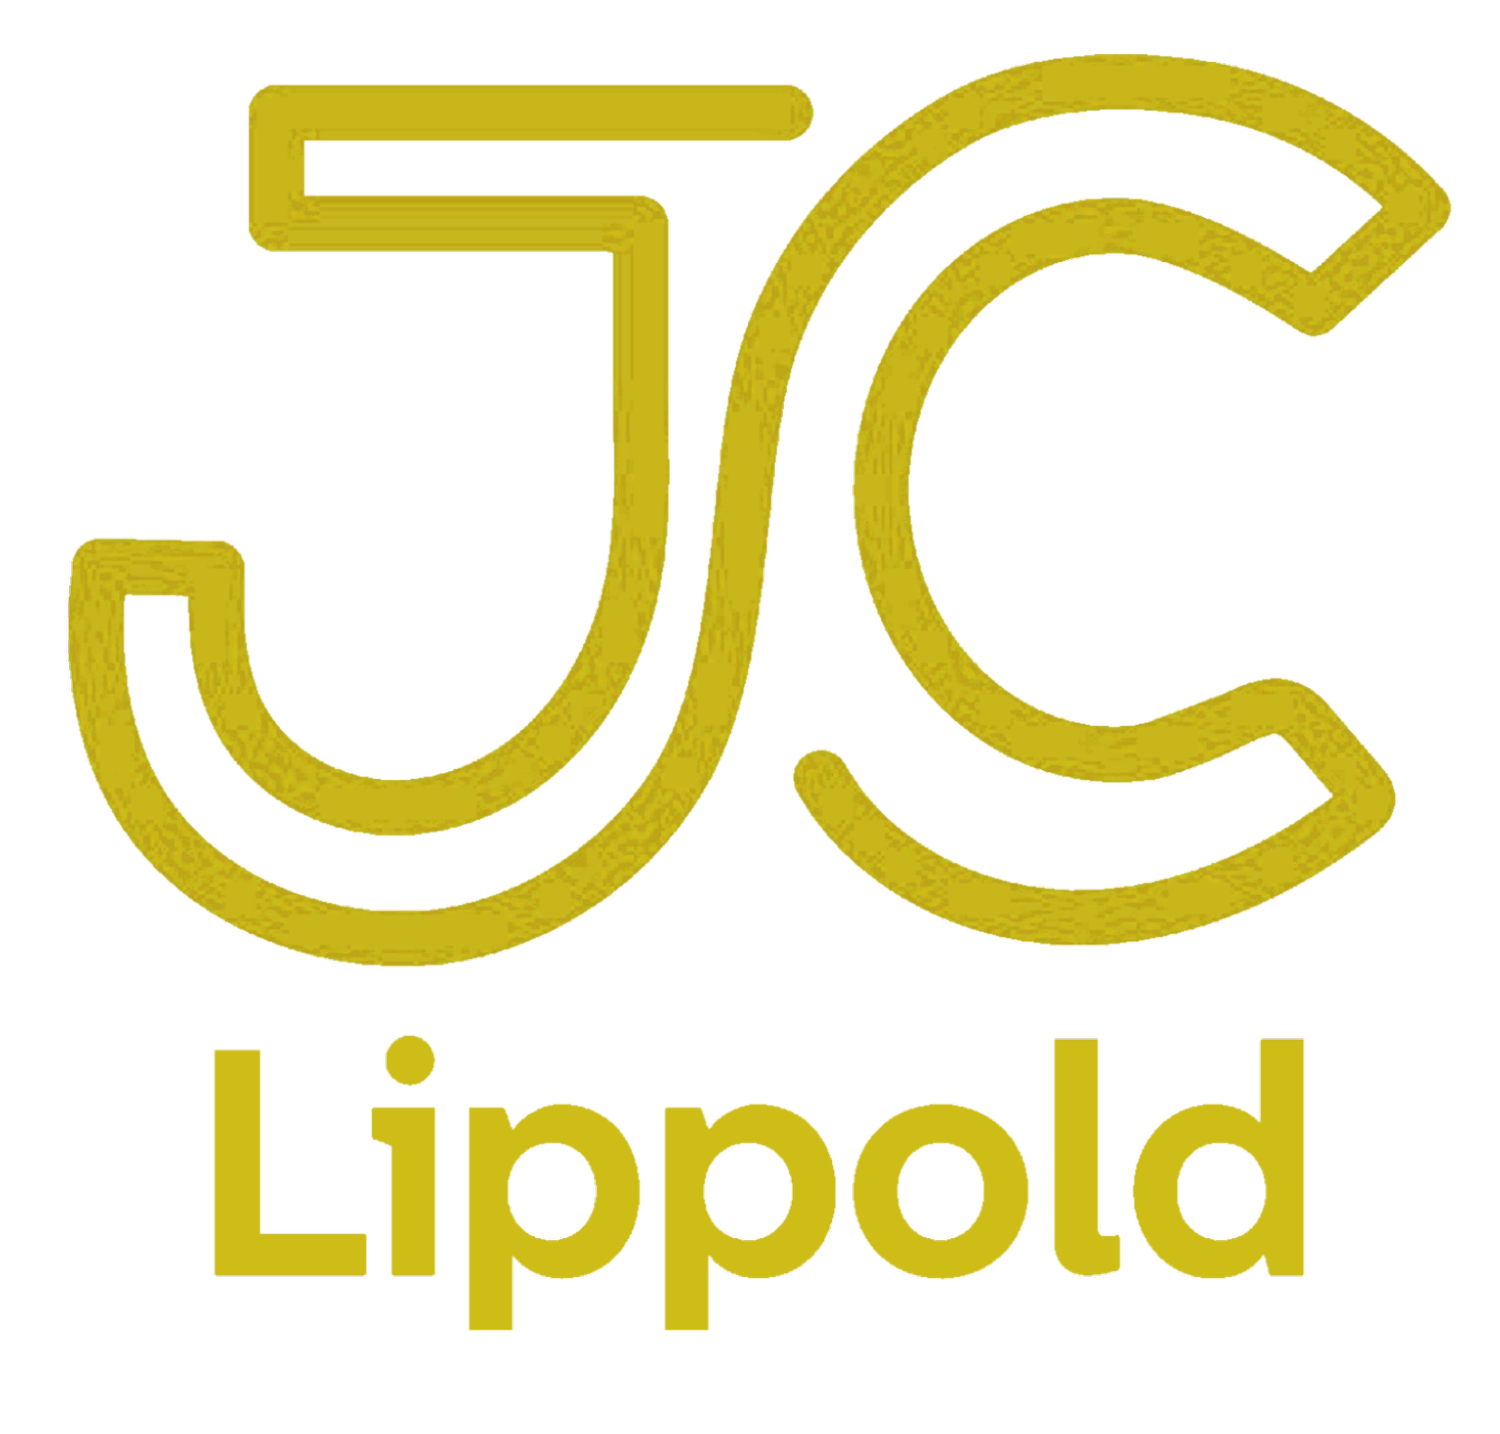 JC Lippold